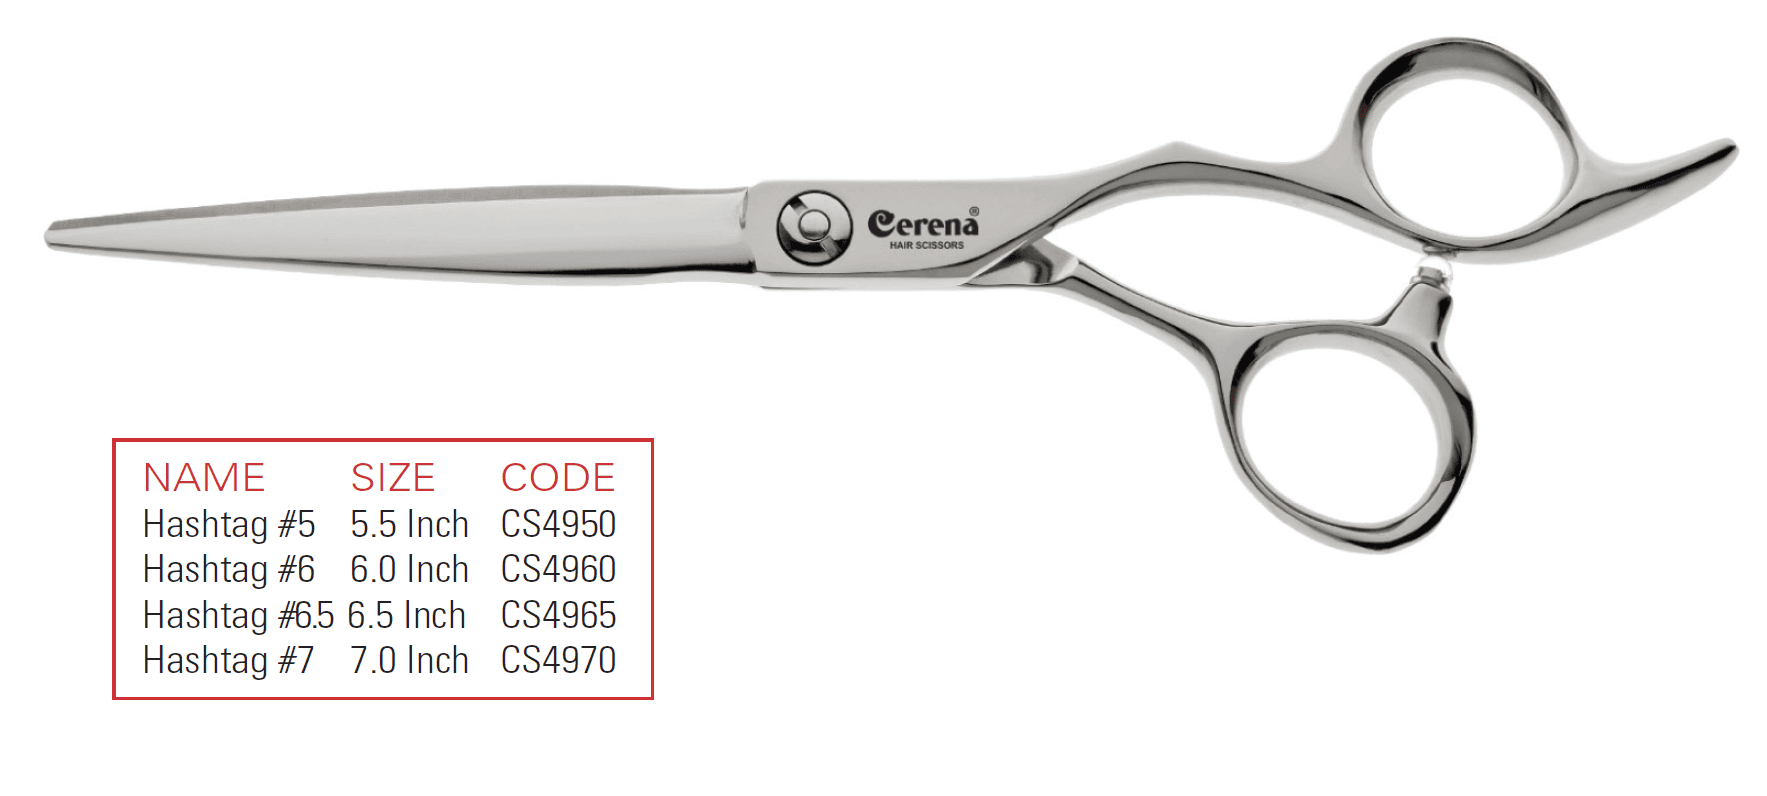 Cerena Hashtag No6 - 4960 - 6.0 Inch Scissor